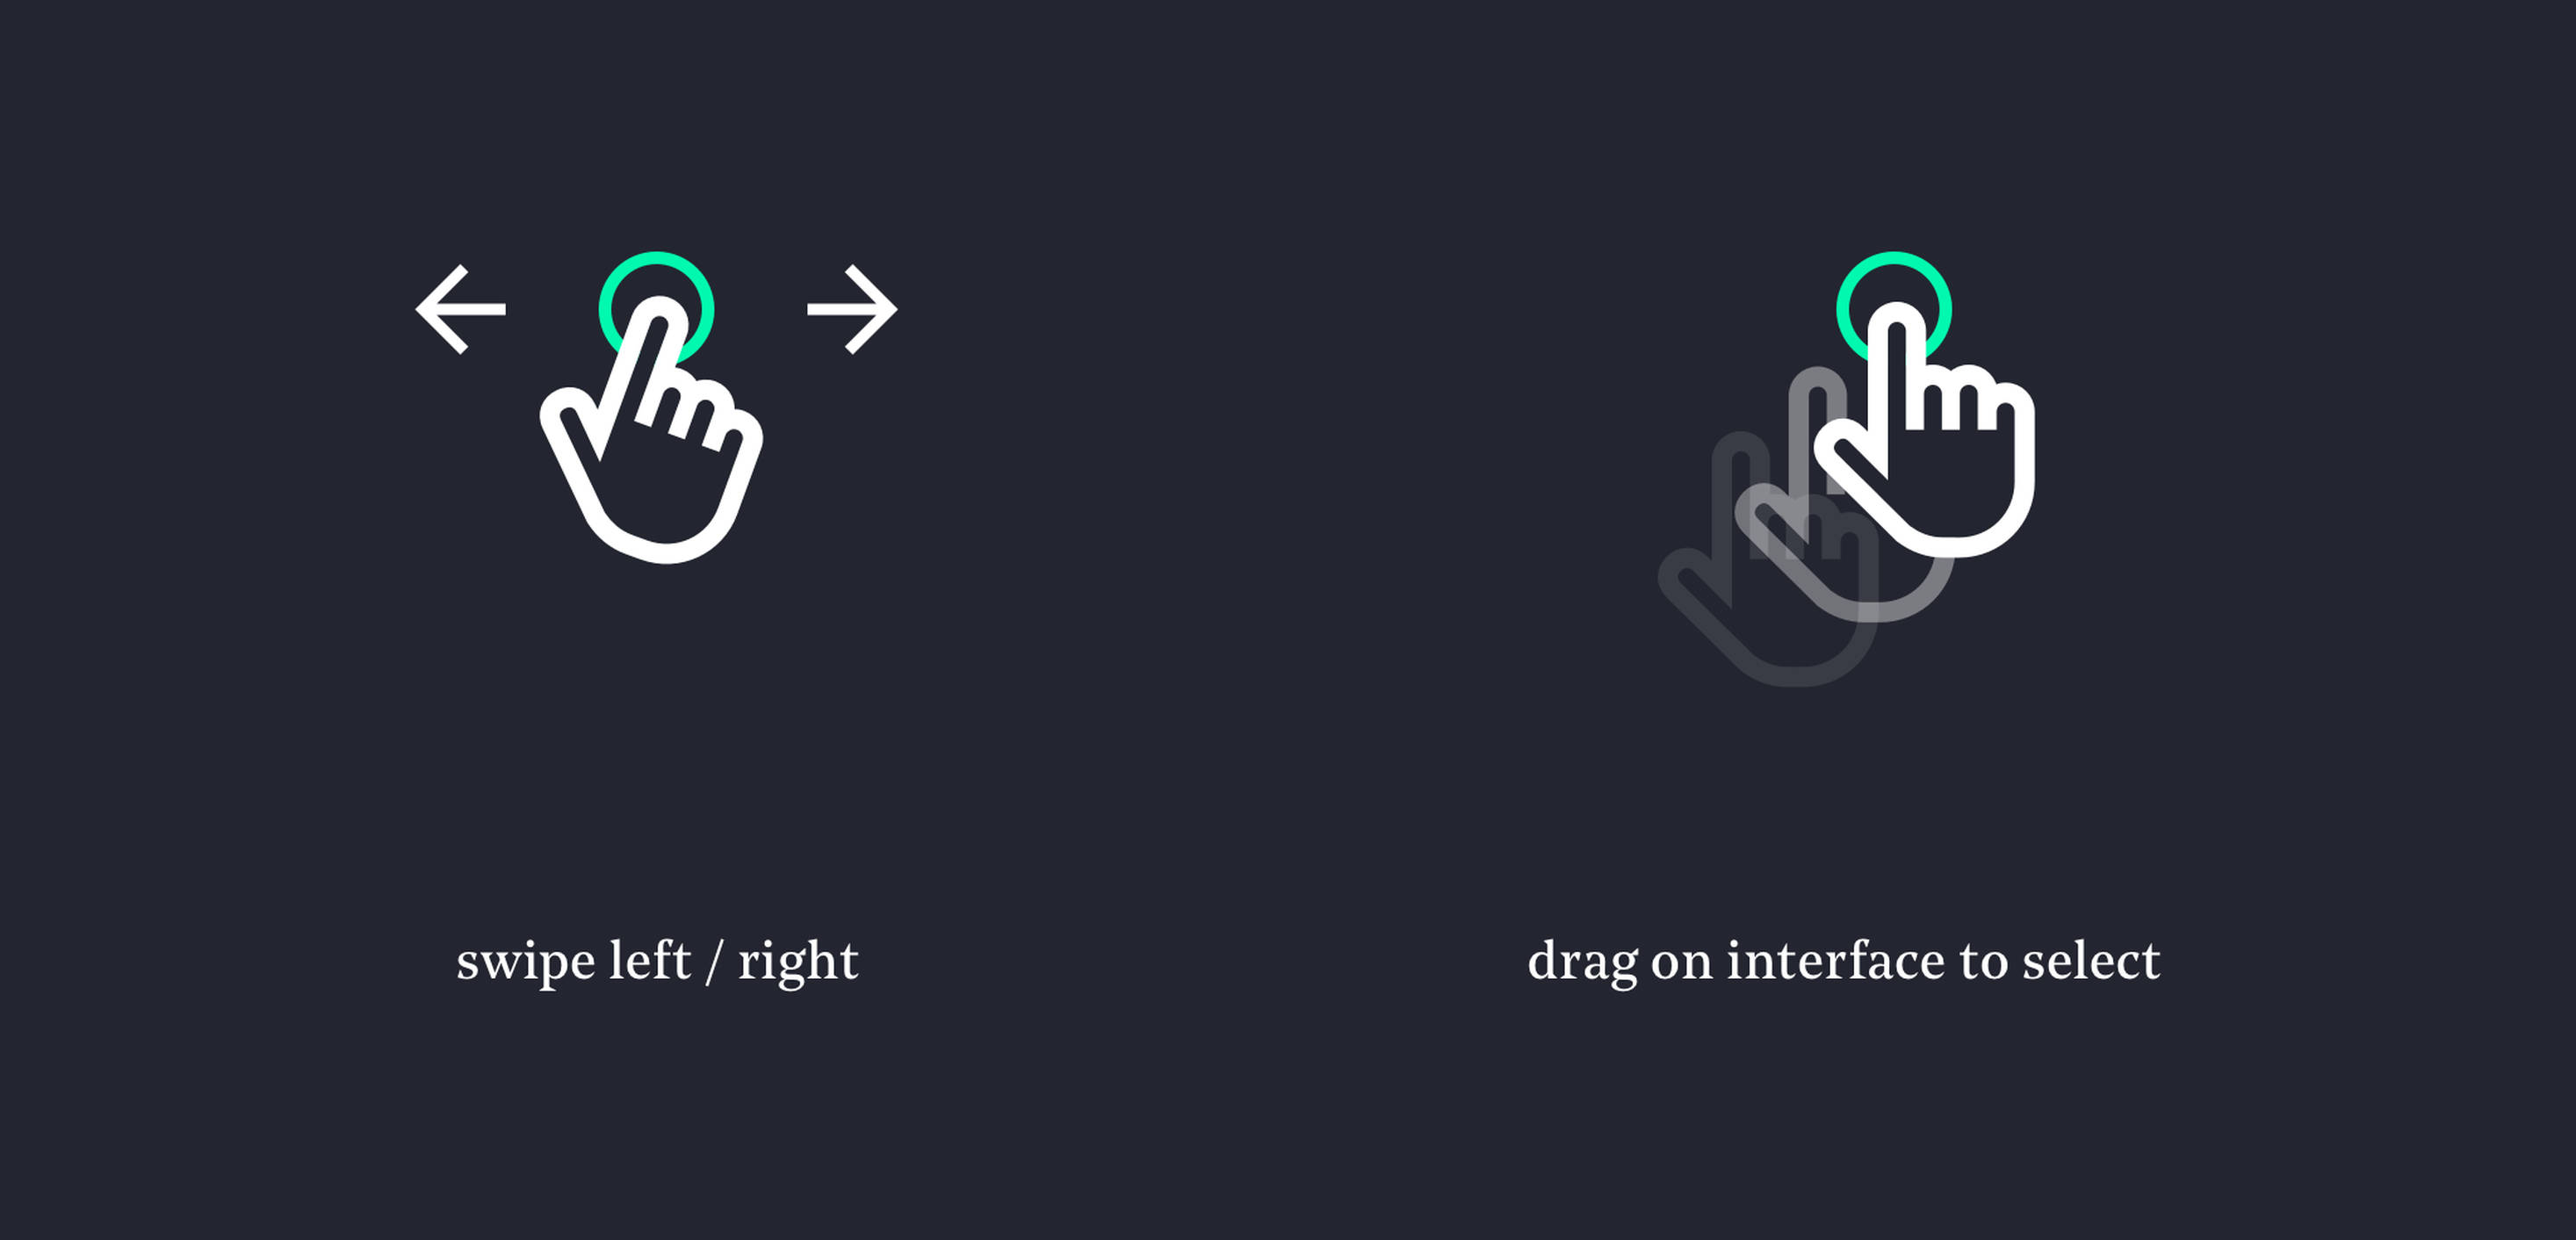 Two ways of interacting: swipe or drag.